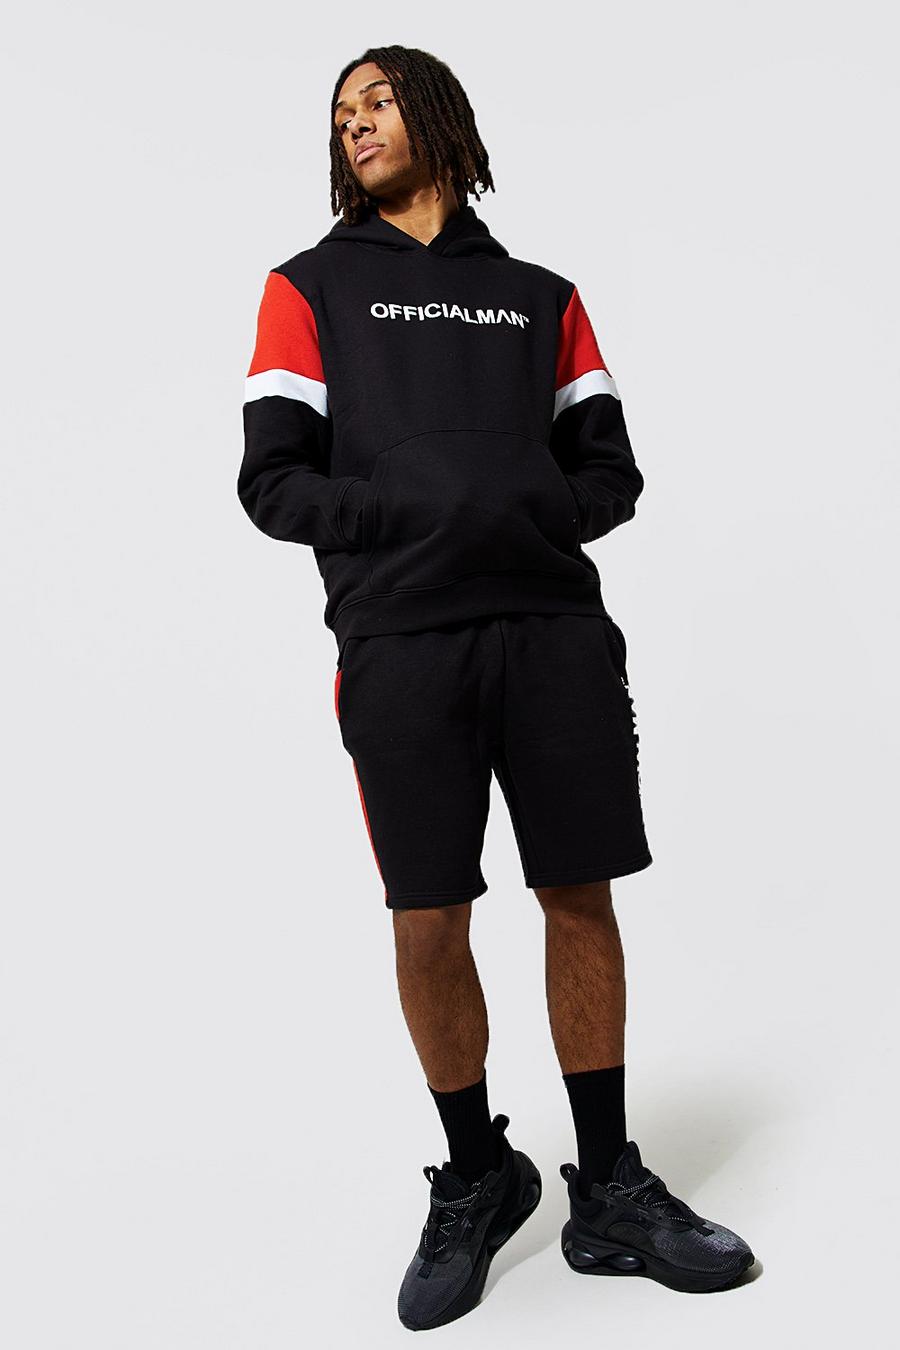 Kurzer Official Man Colorblock Trainingsanzug, Red rouge